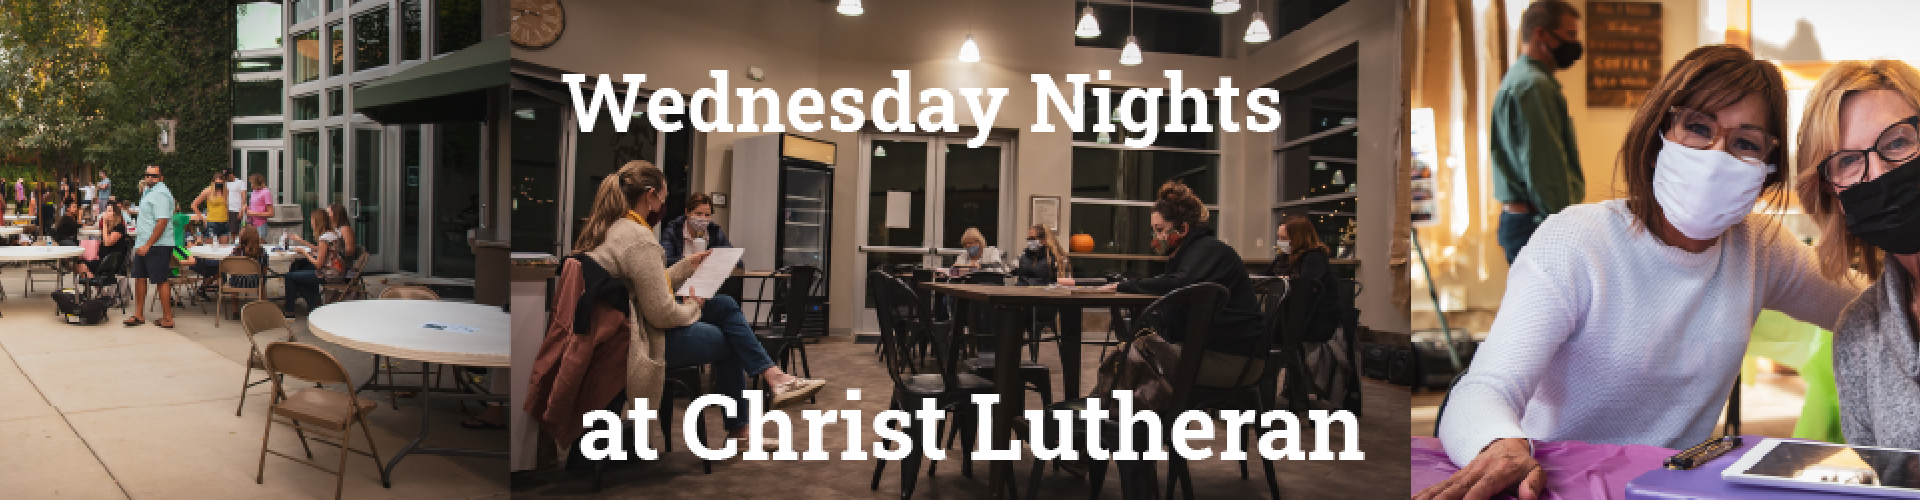 Wednesday Nights at Christ Lutheran